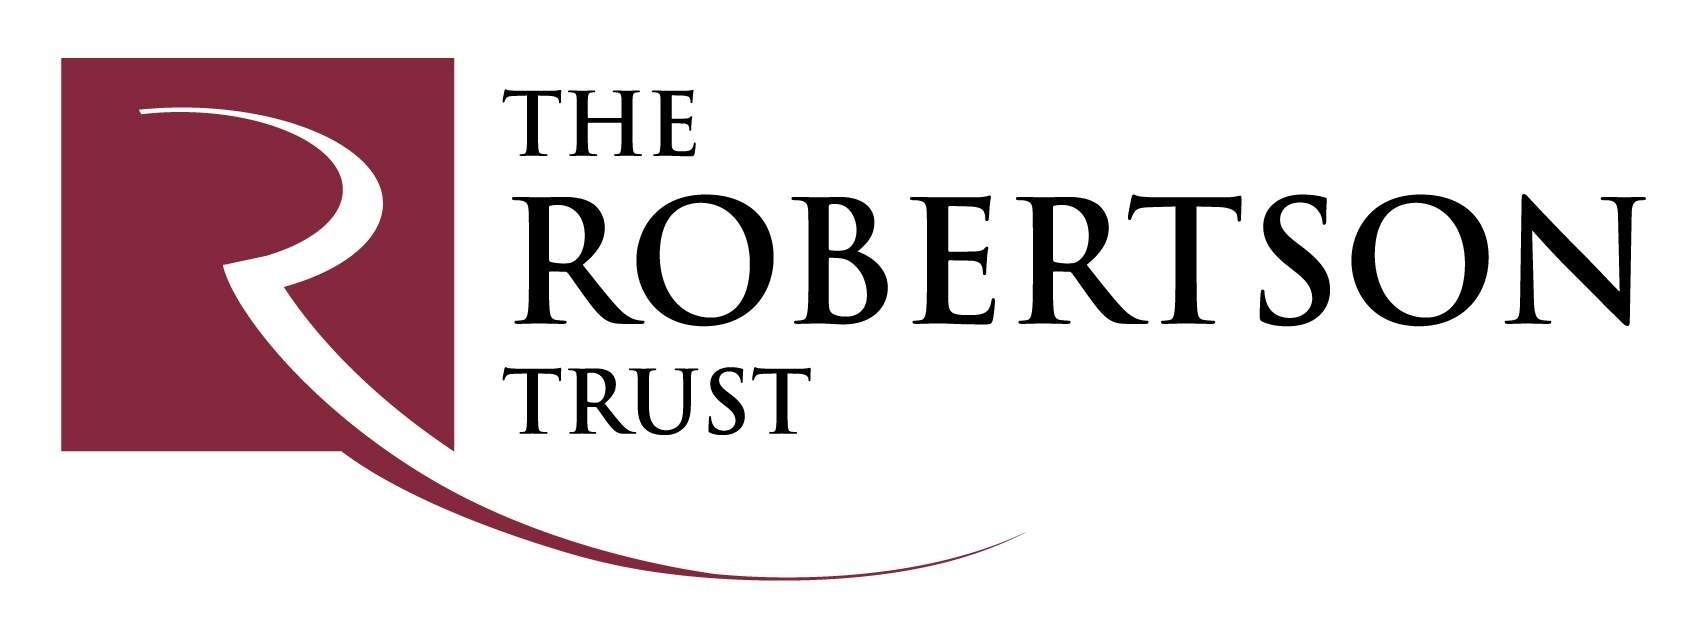 robertson trust logo